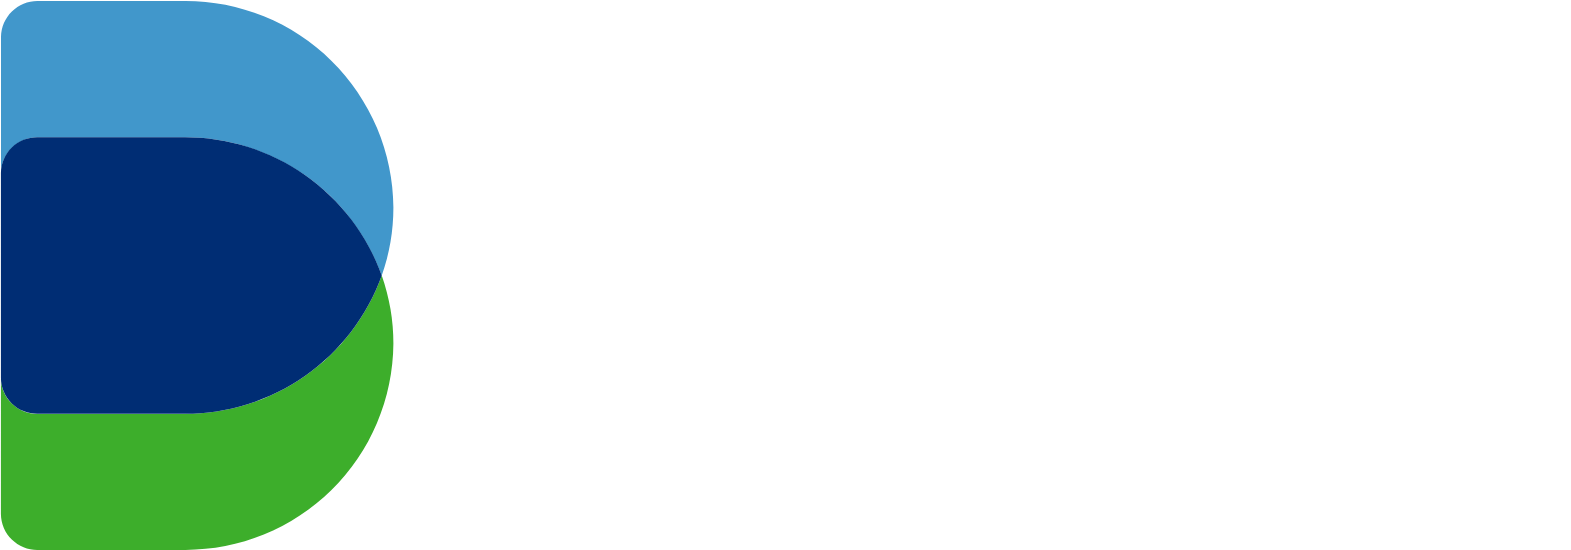 Dukhan Bank Logo groß für dunkle Hintergründe (transparentes PNG)